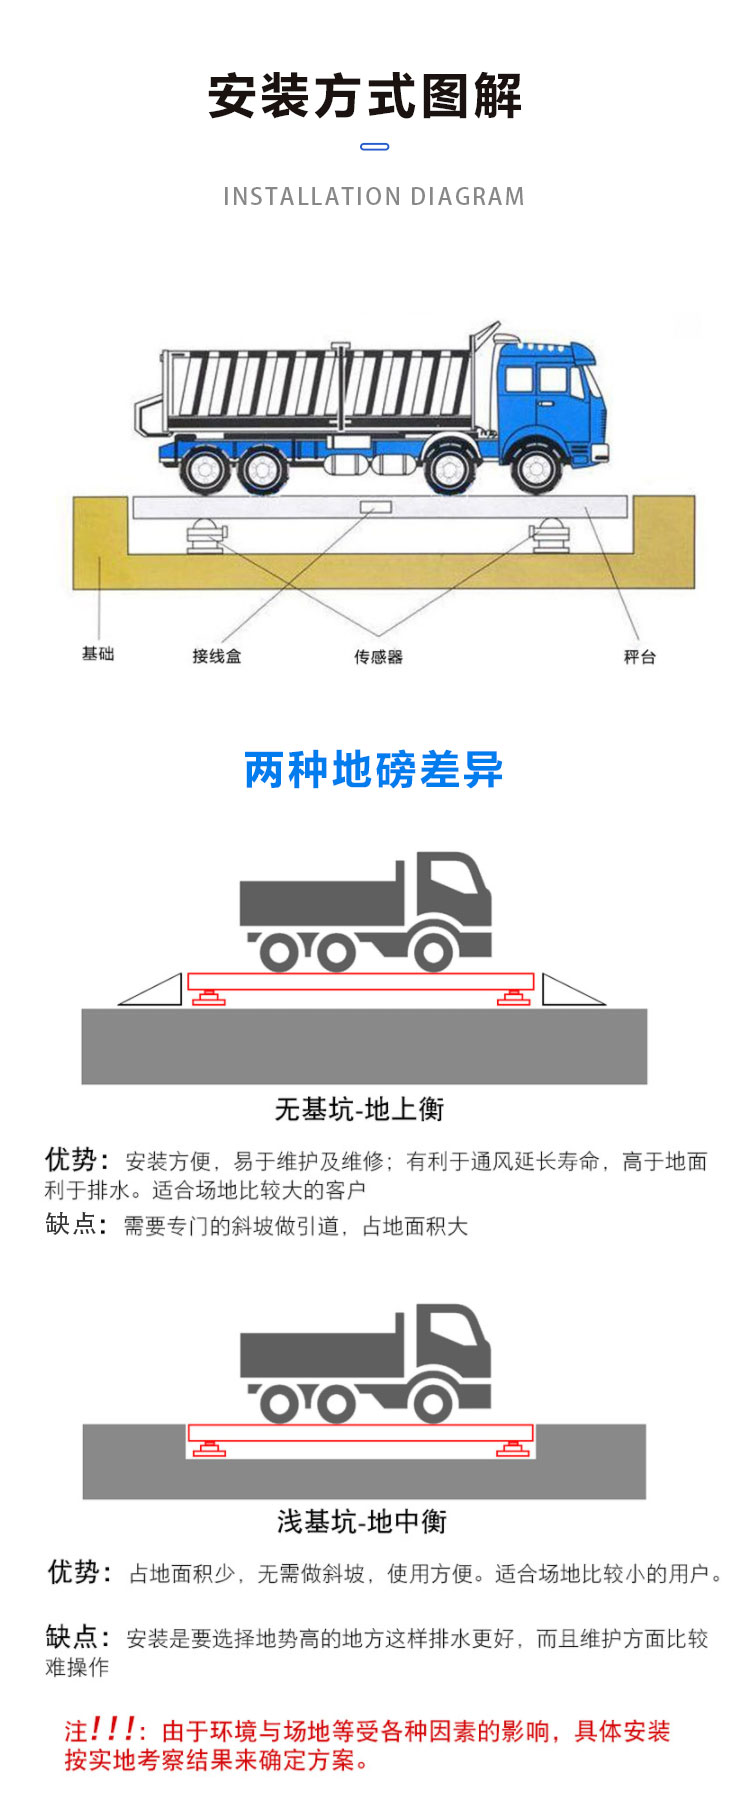 Electronic truck scale 100 ton weighbridge digital weighing sensor Internet of Things instrument Yingxiang weighing equipment